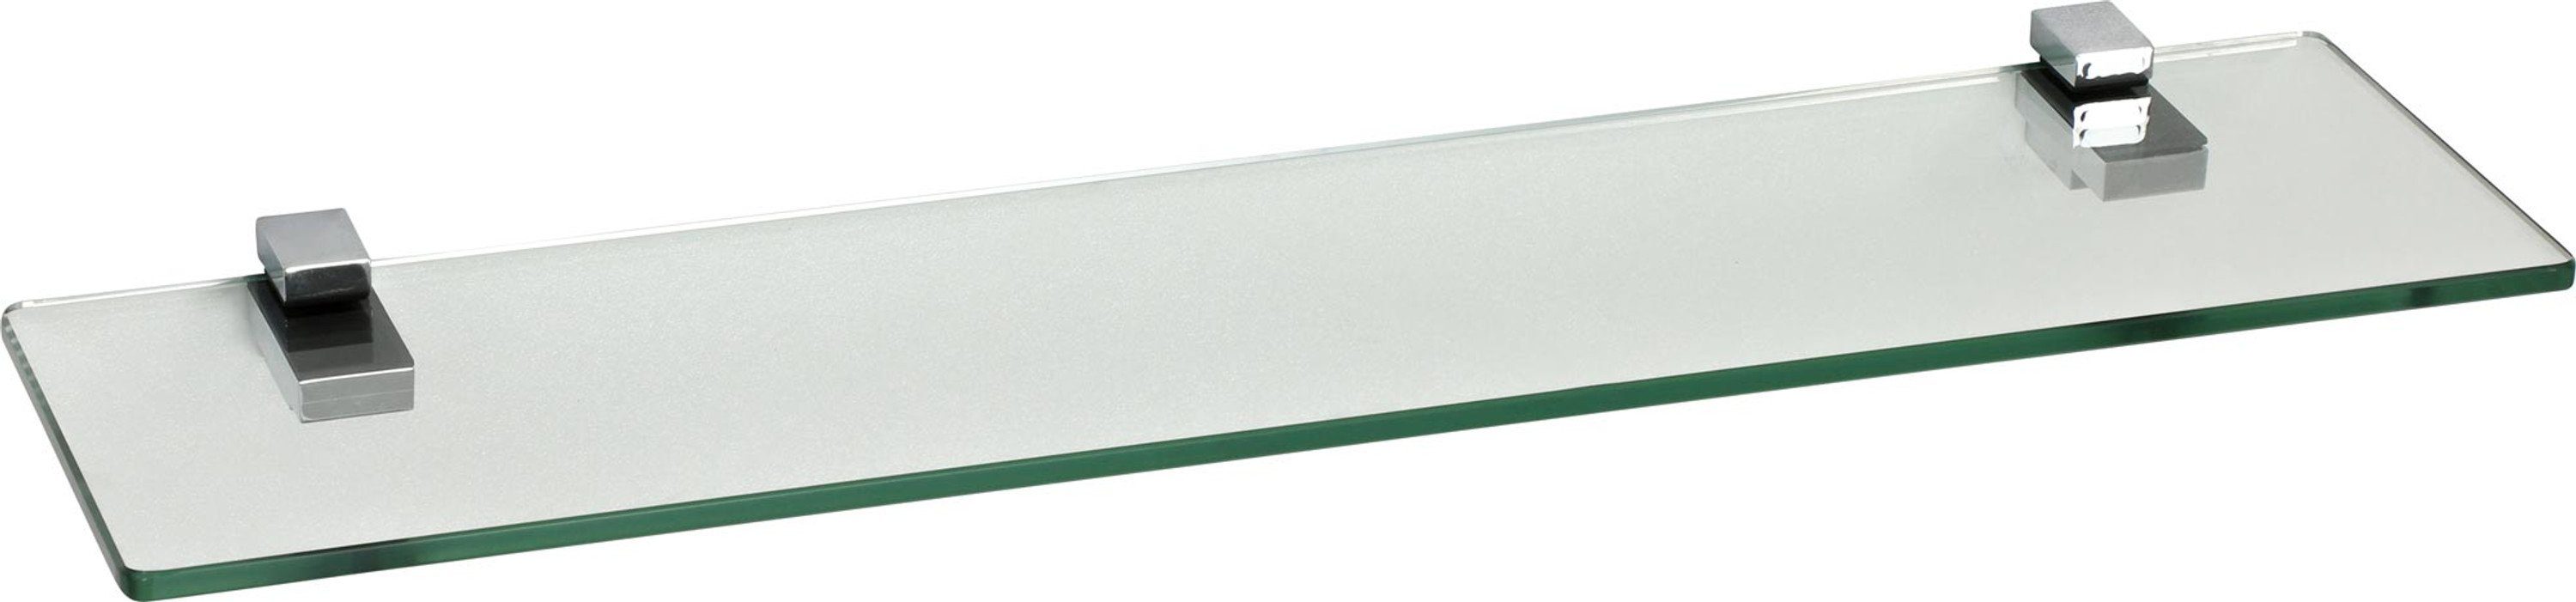 ib style Wandregal Glasregal 10mm klar 40 x 15 cm + Clip KUBI Verchromt, Glasboden aus ESG-Sicherheitsglas - Wandregal